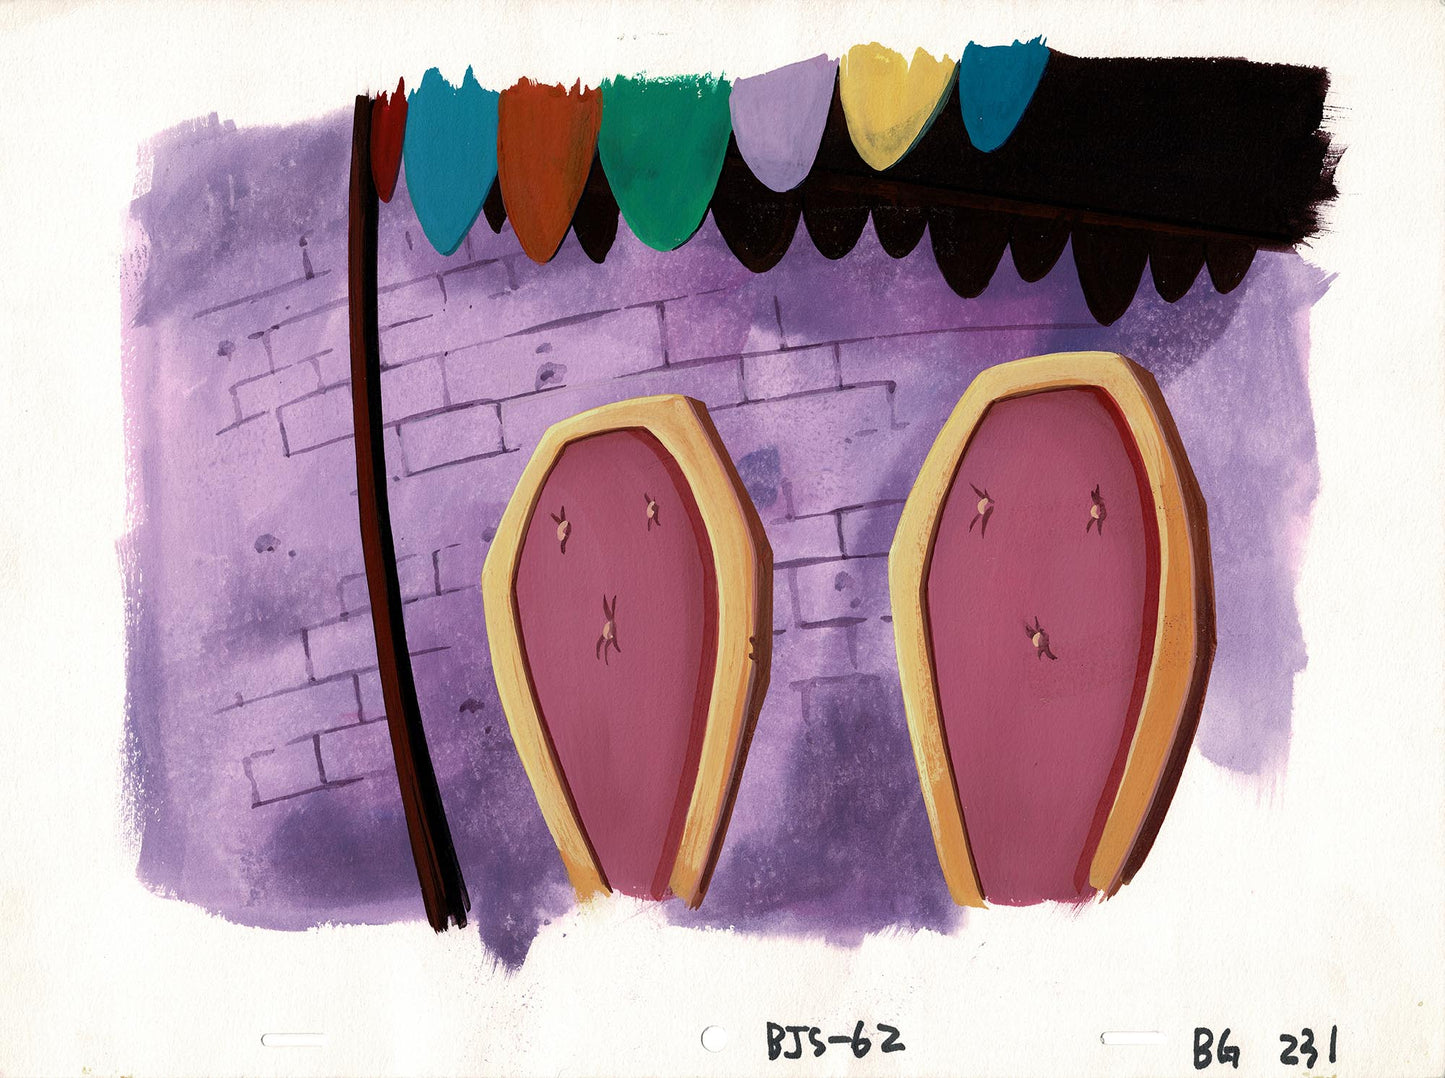 Beetlejuice Original Production Animation Cel and Original Background Nelvana 12